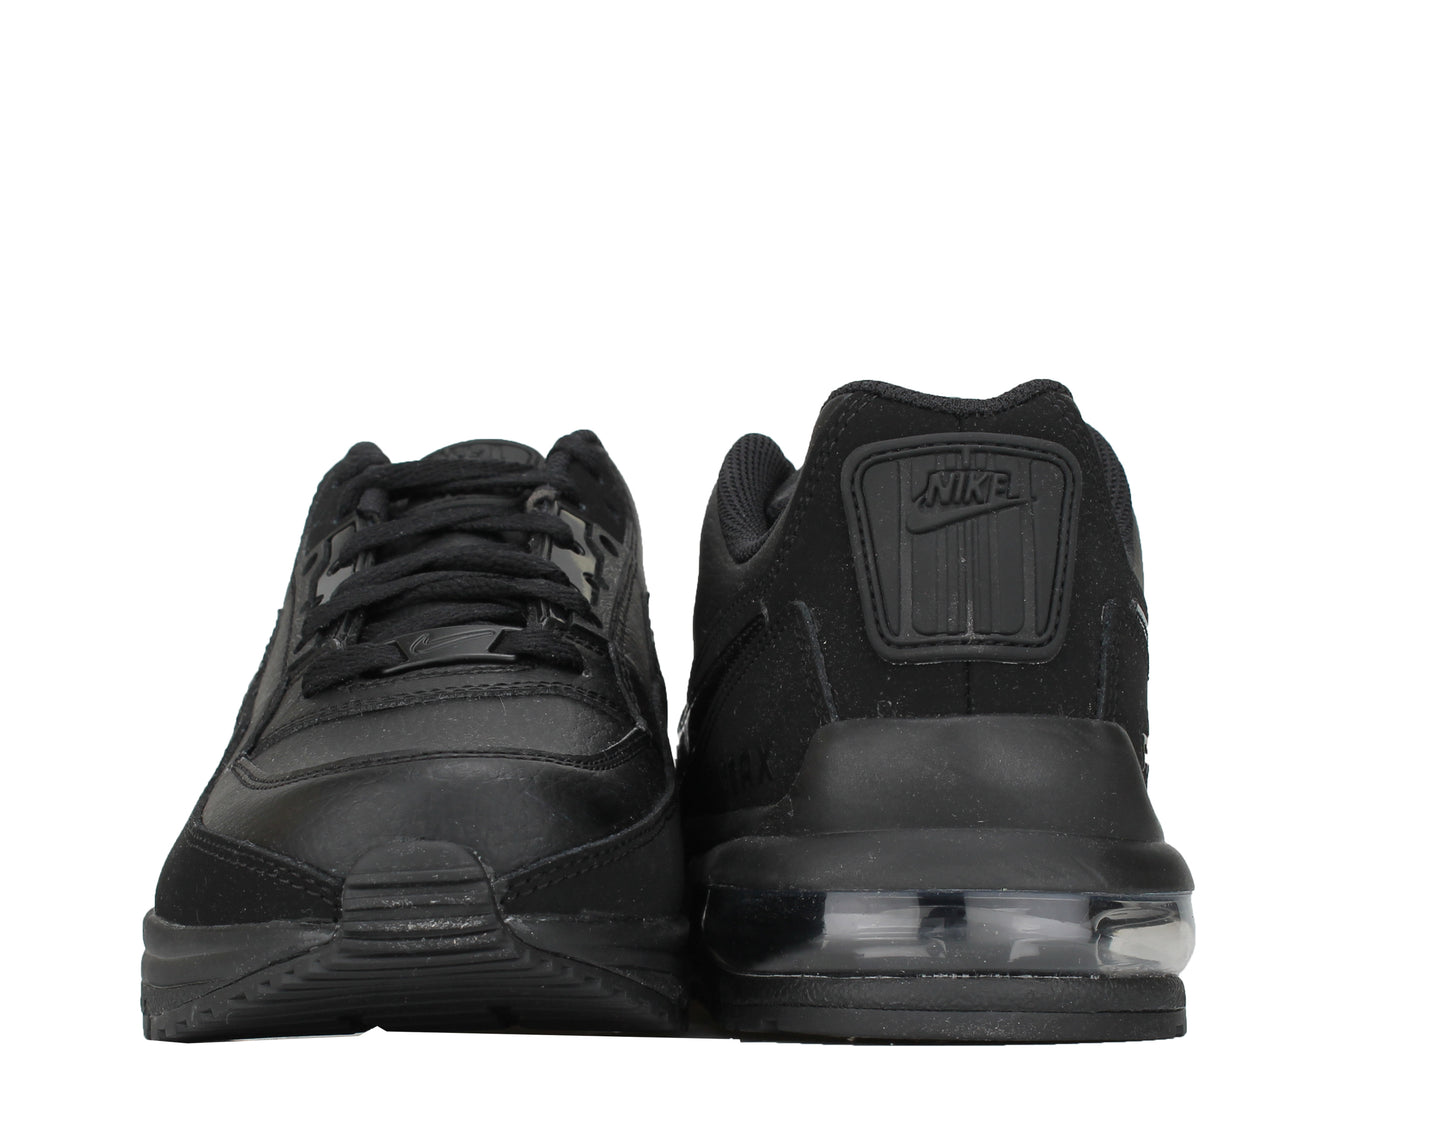 Nike Air Max LTD 3 Black/Black Men's Running Shoes 687977-020